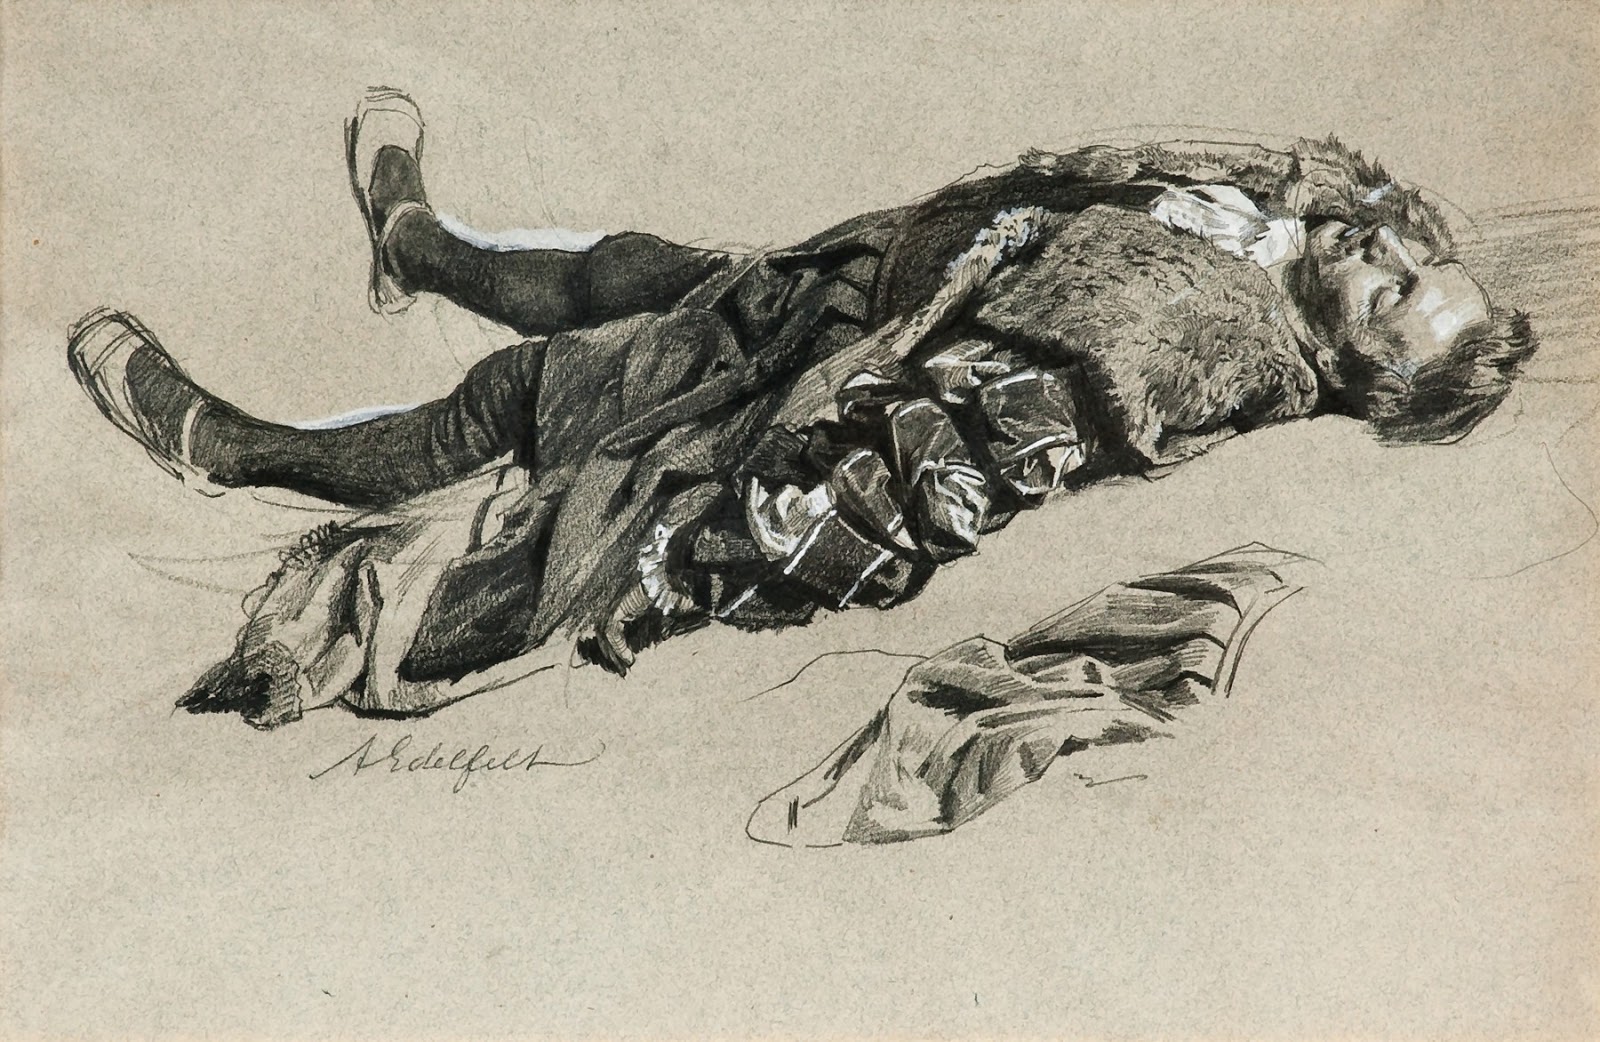 Albert+Edelfelt-1854-1905 (4).jpg